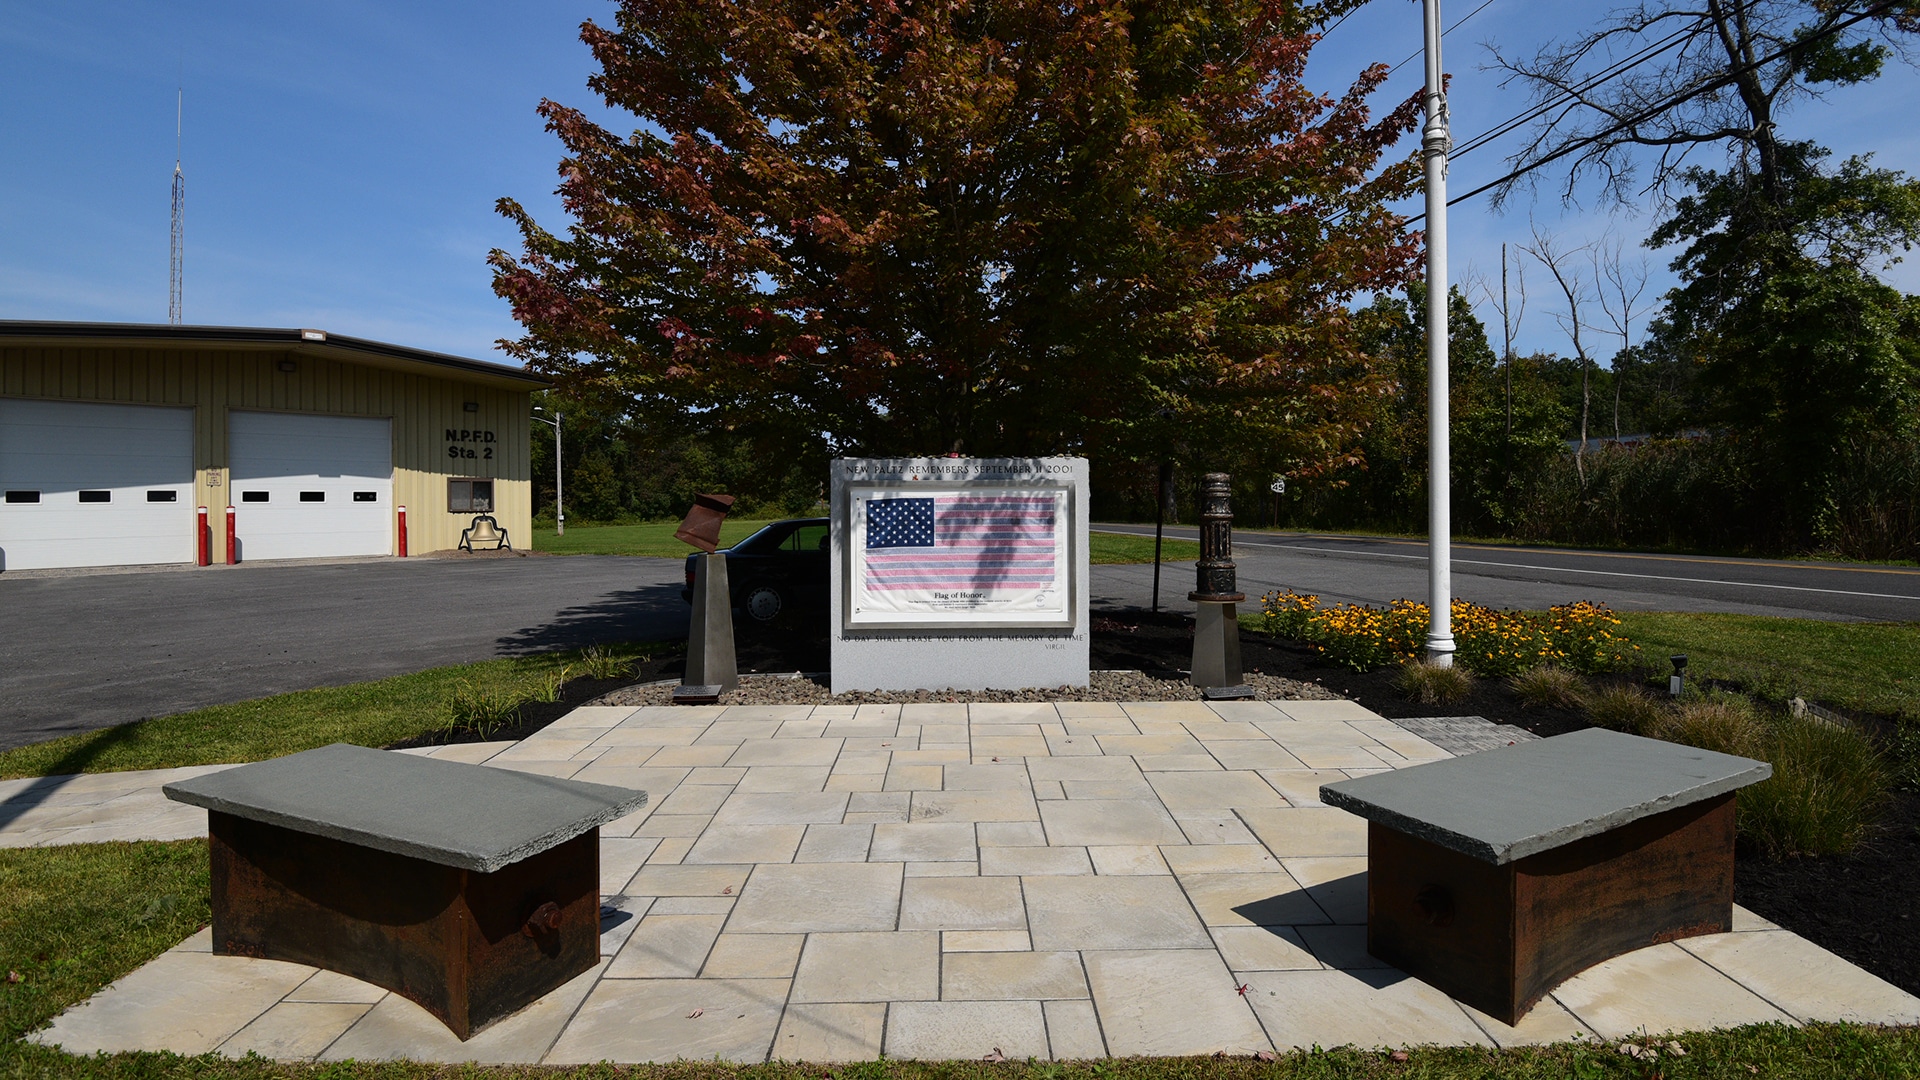 New Paltz Community 9/11 Memorial